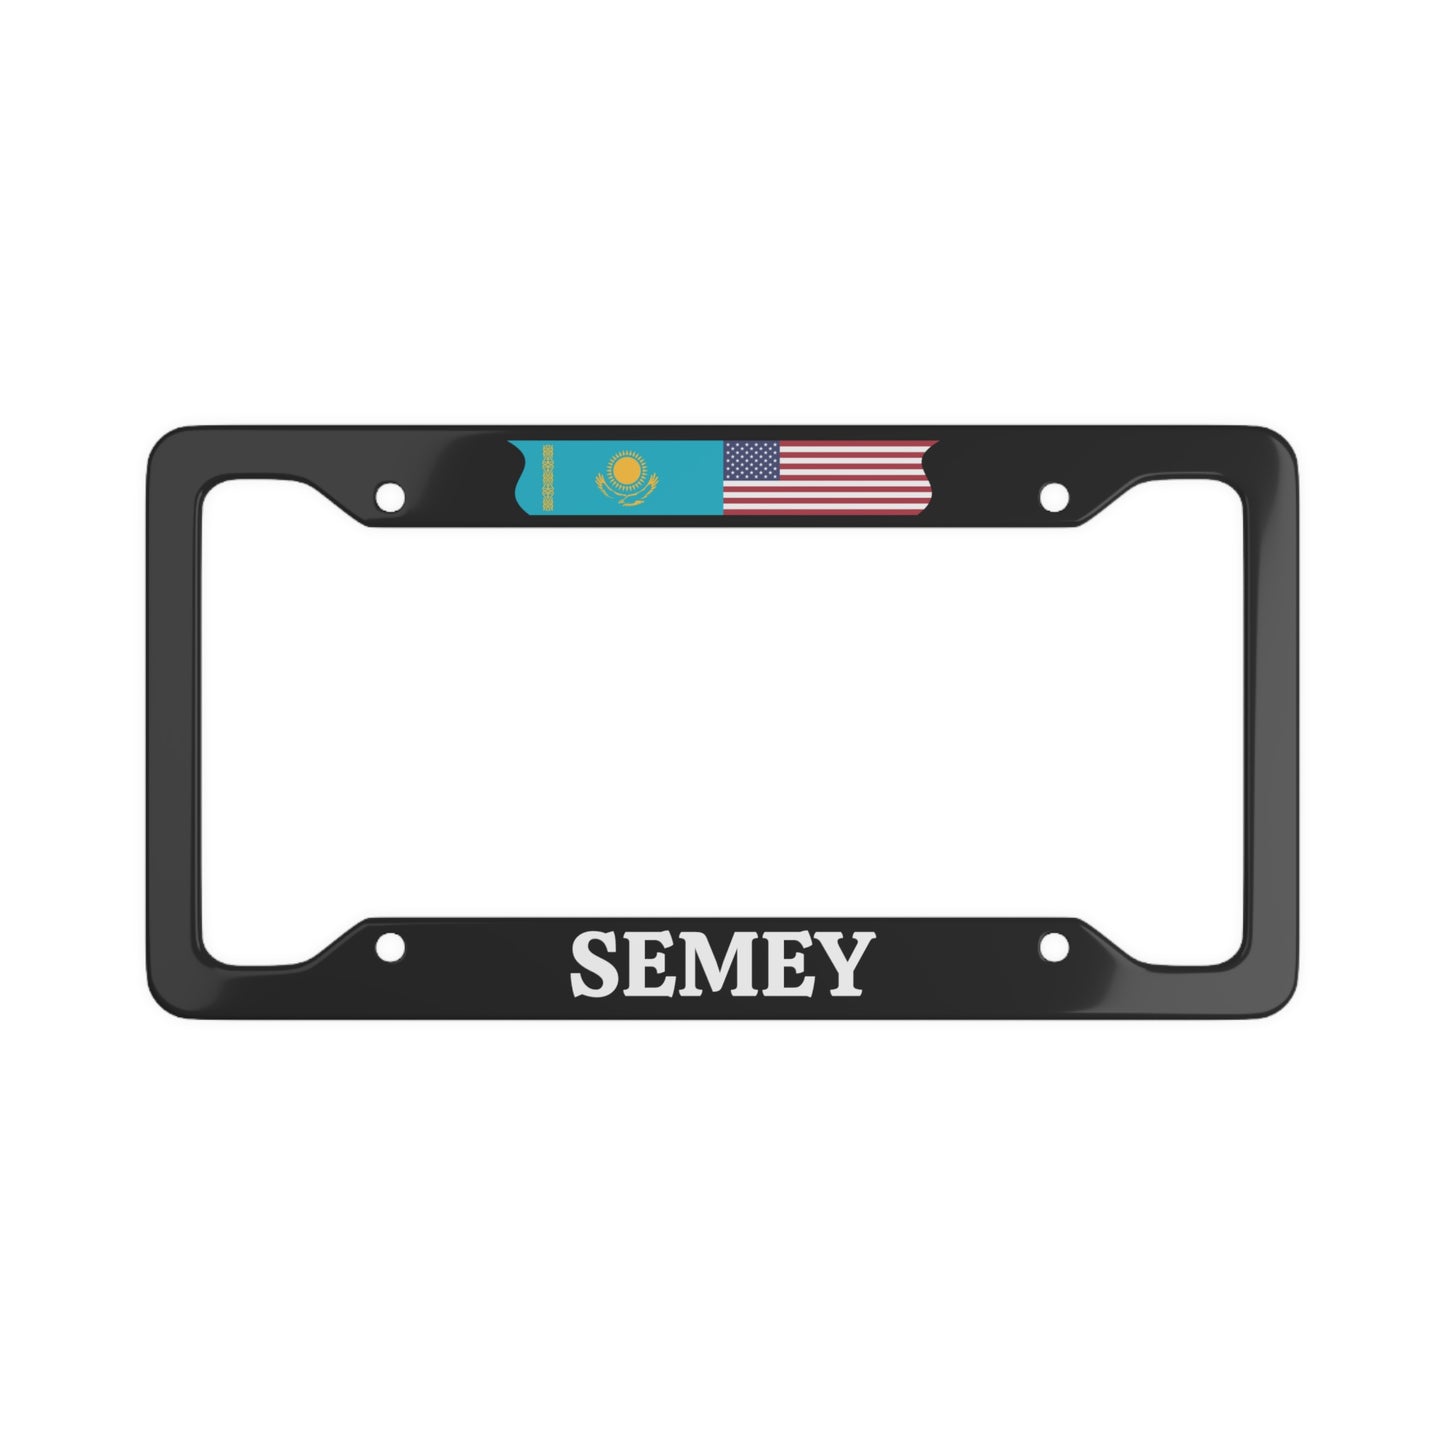 Semey KZ License Plate Frame